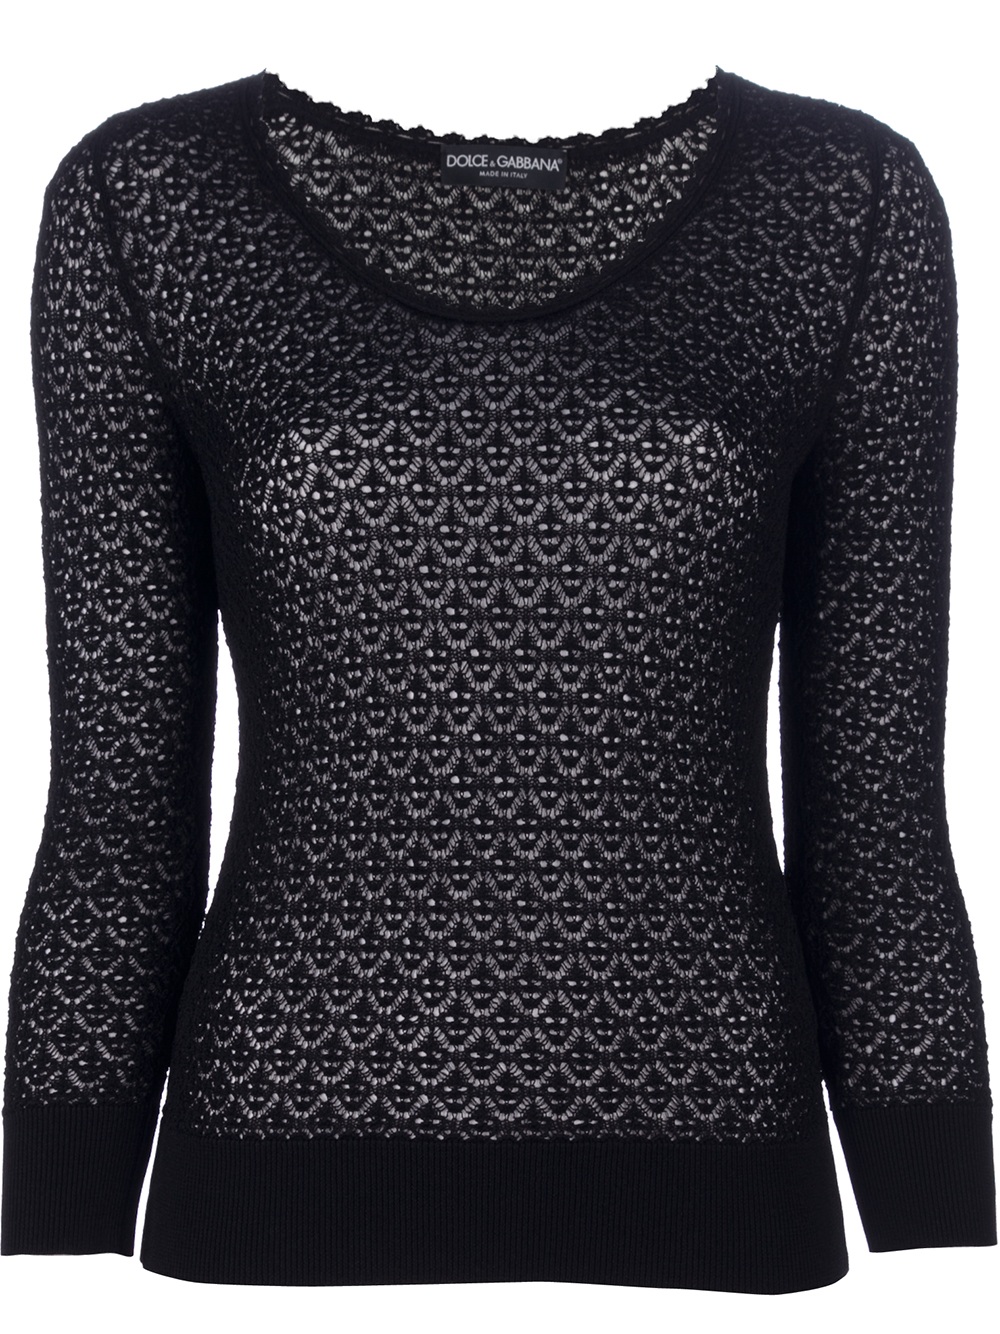 Dolce & Gabbana Lace Sweater in Black | Lyst